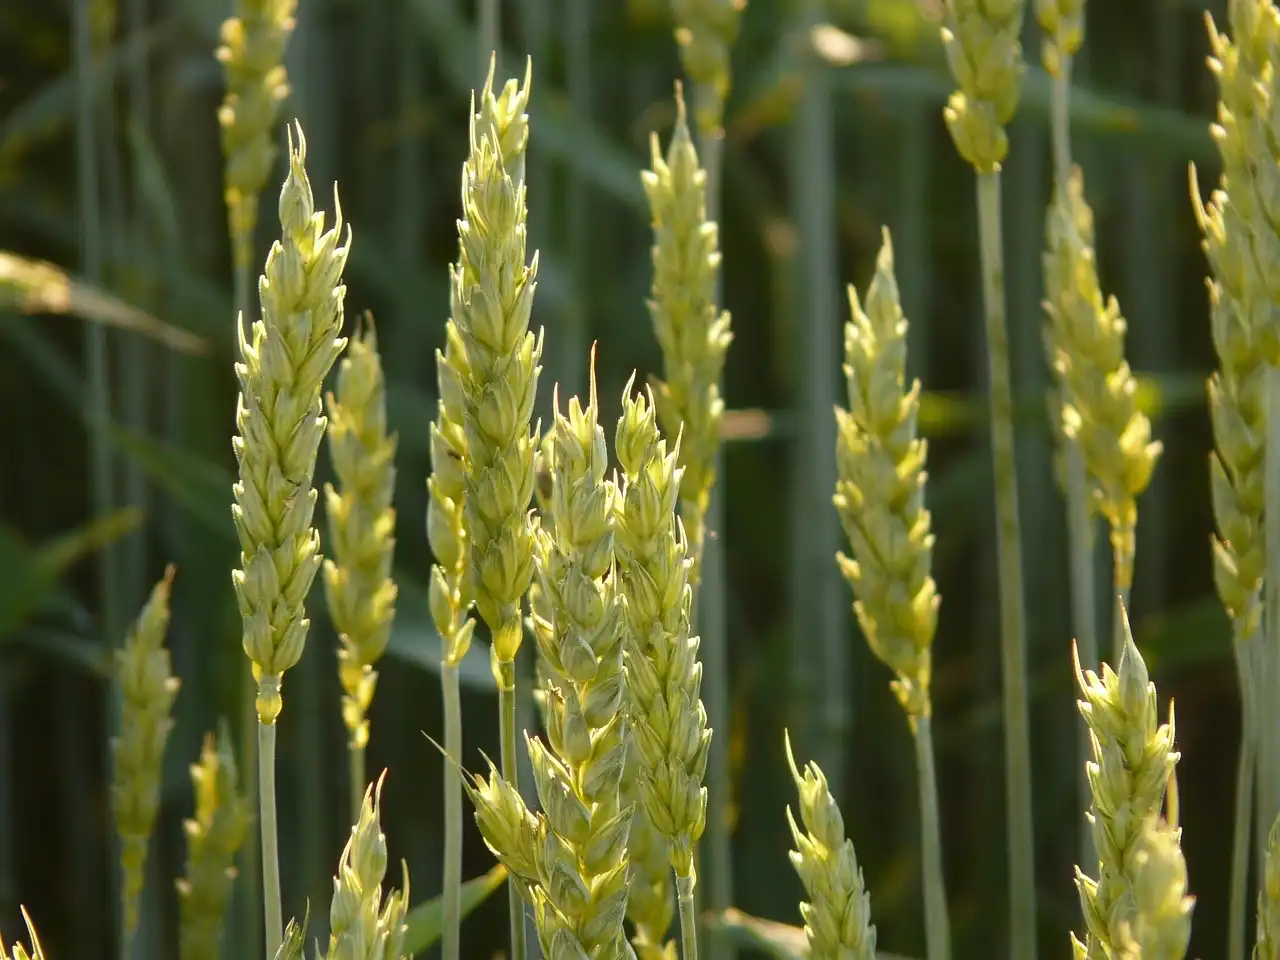 Researchers present new approach to identify key regulatory factors in wheat spike development